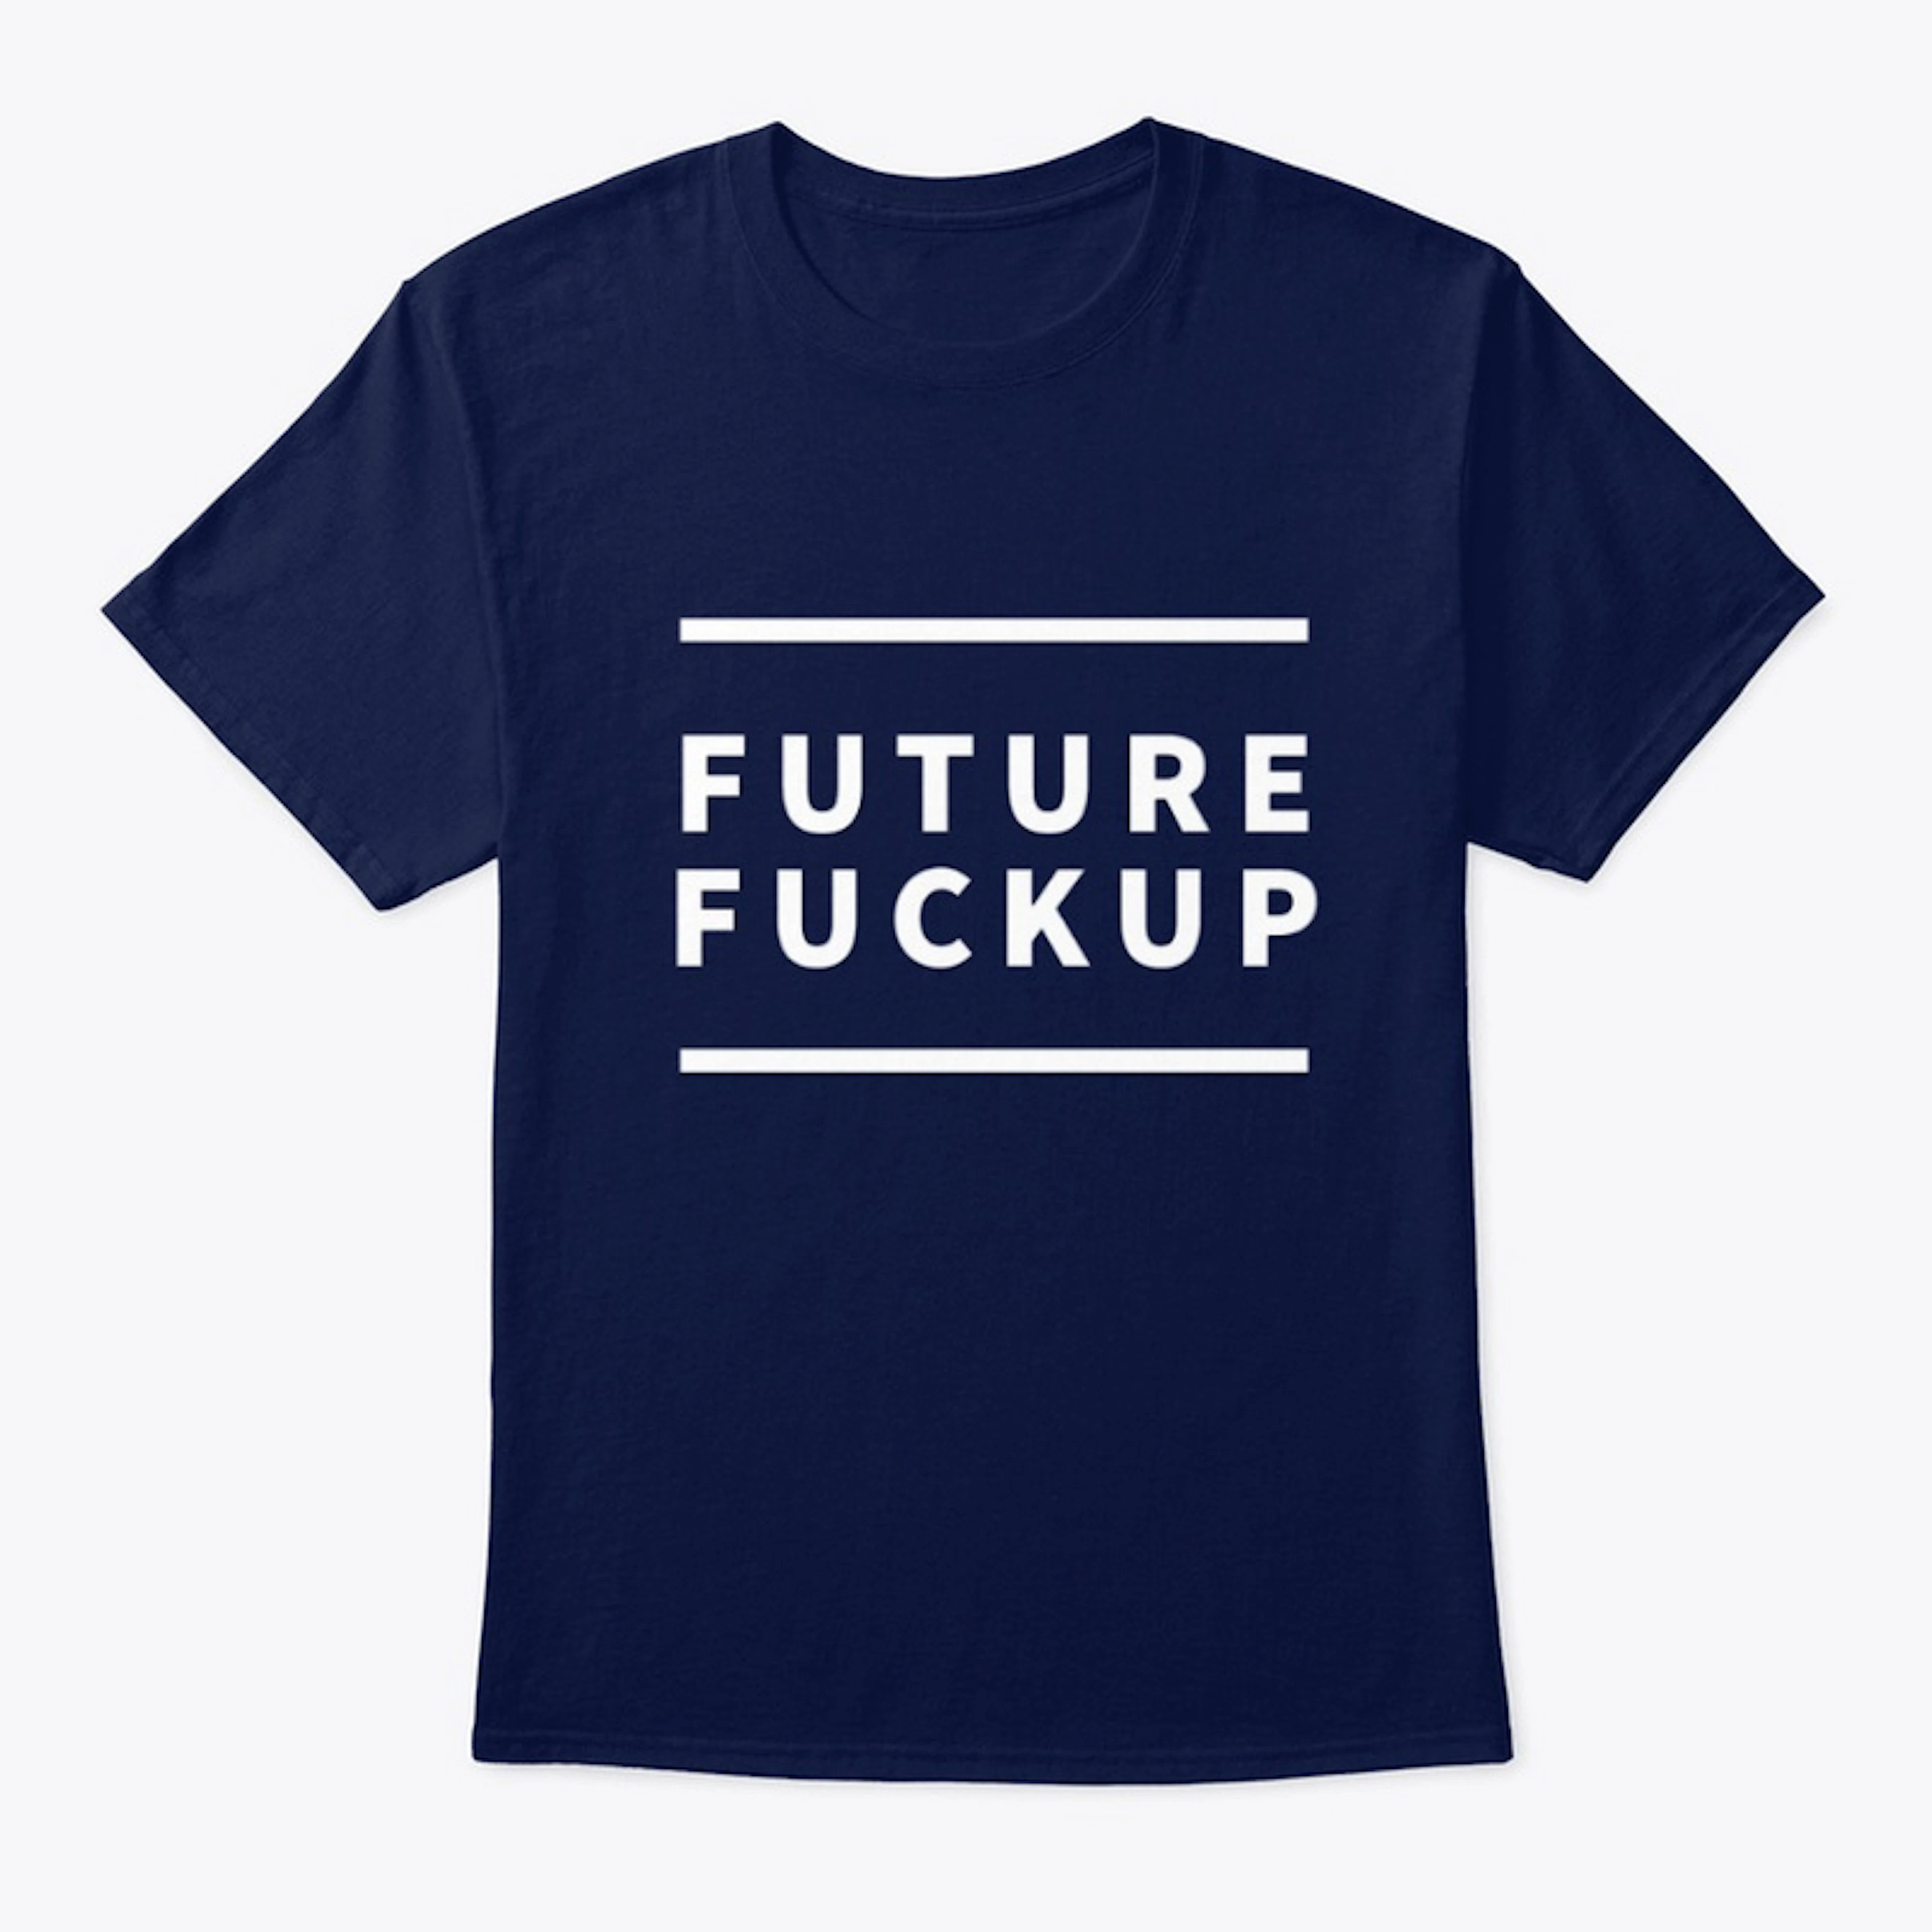 Future fuckup